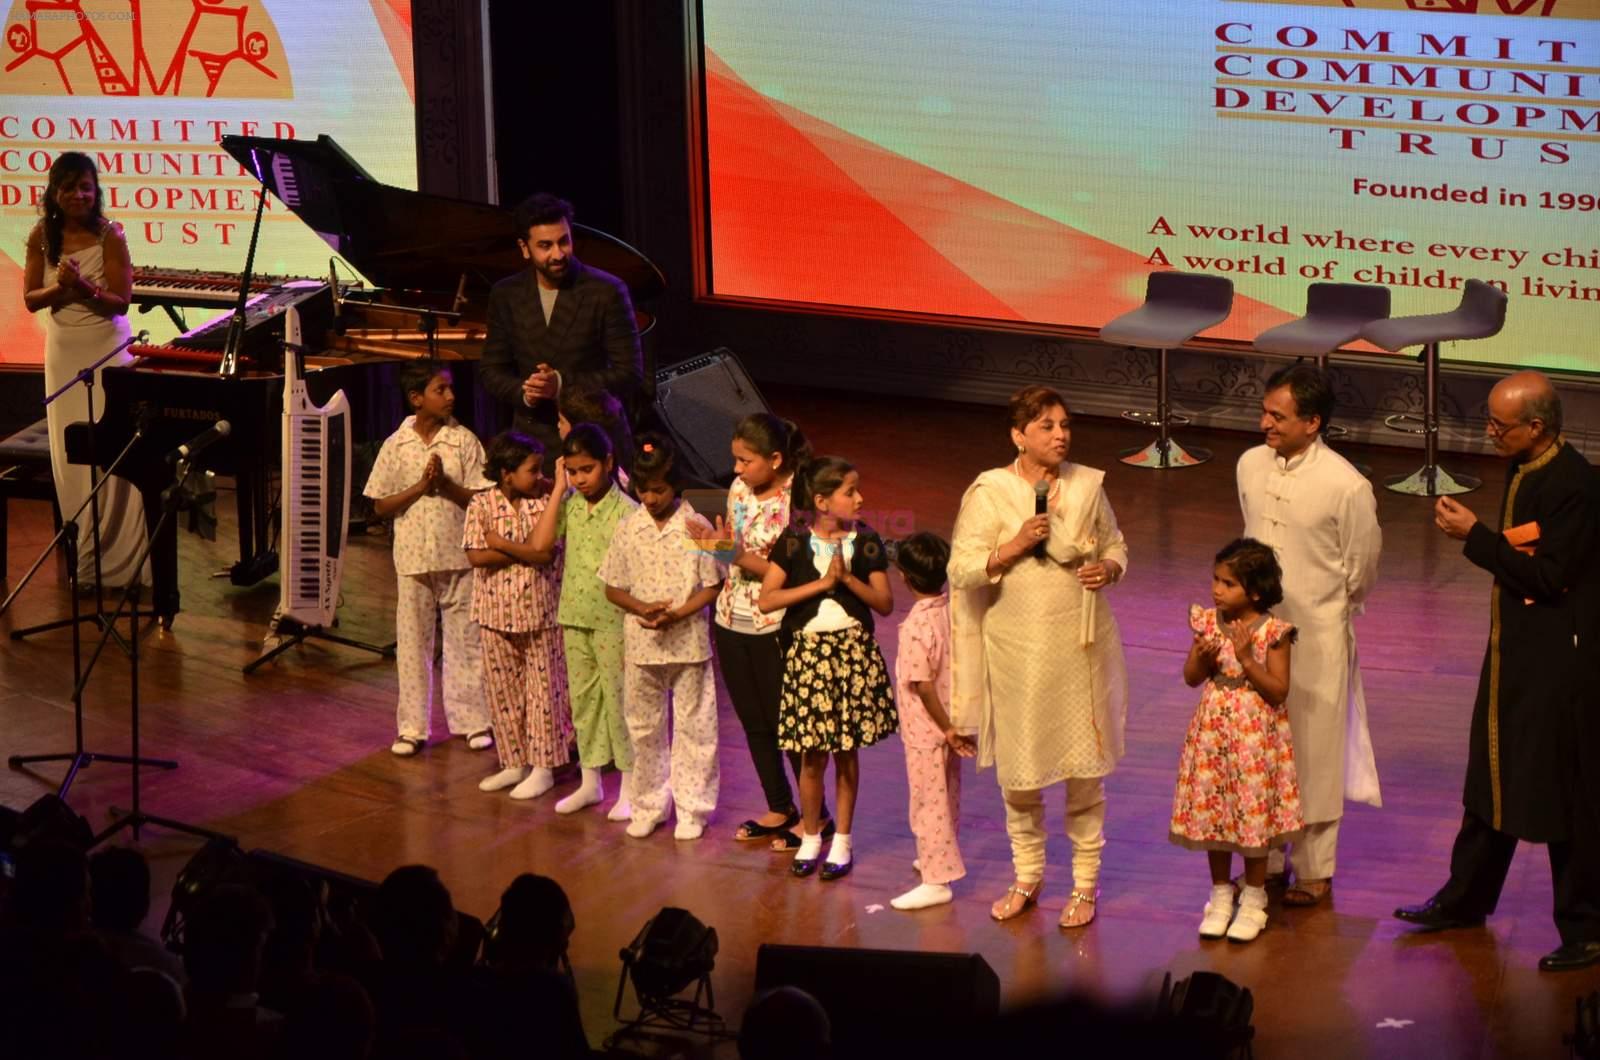 Ranbir Kapoor at ccdt ngo event on 30th Nov 2015